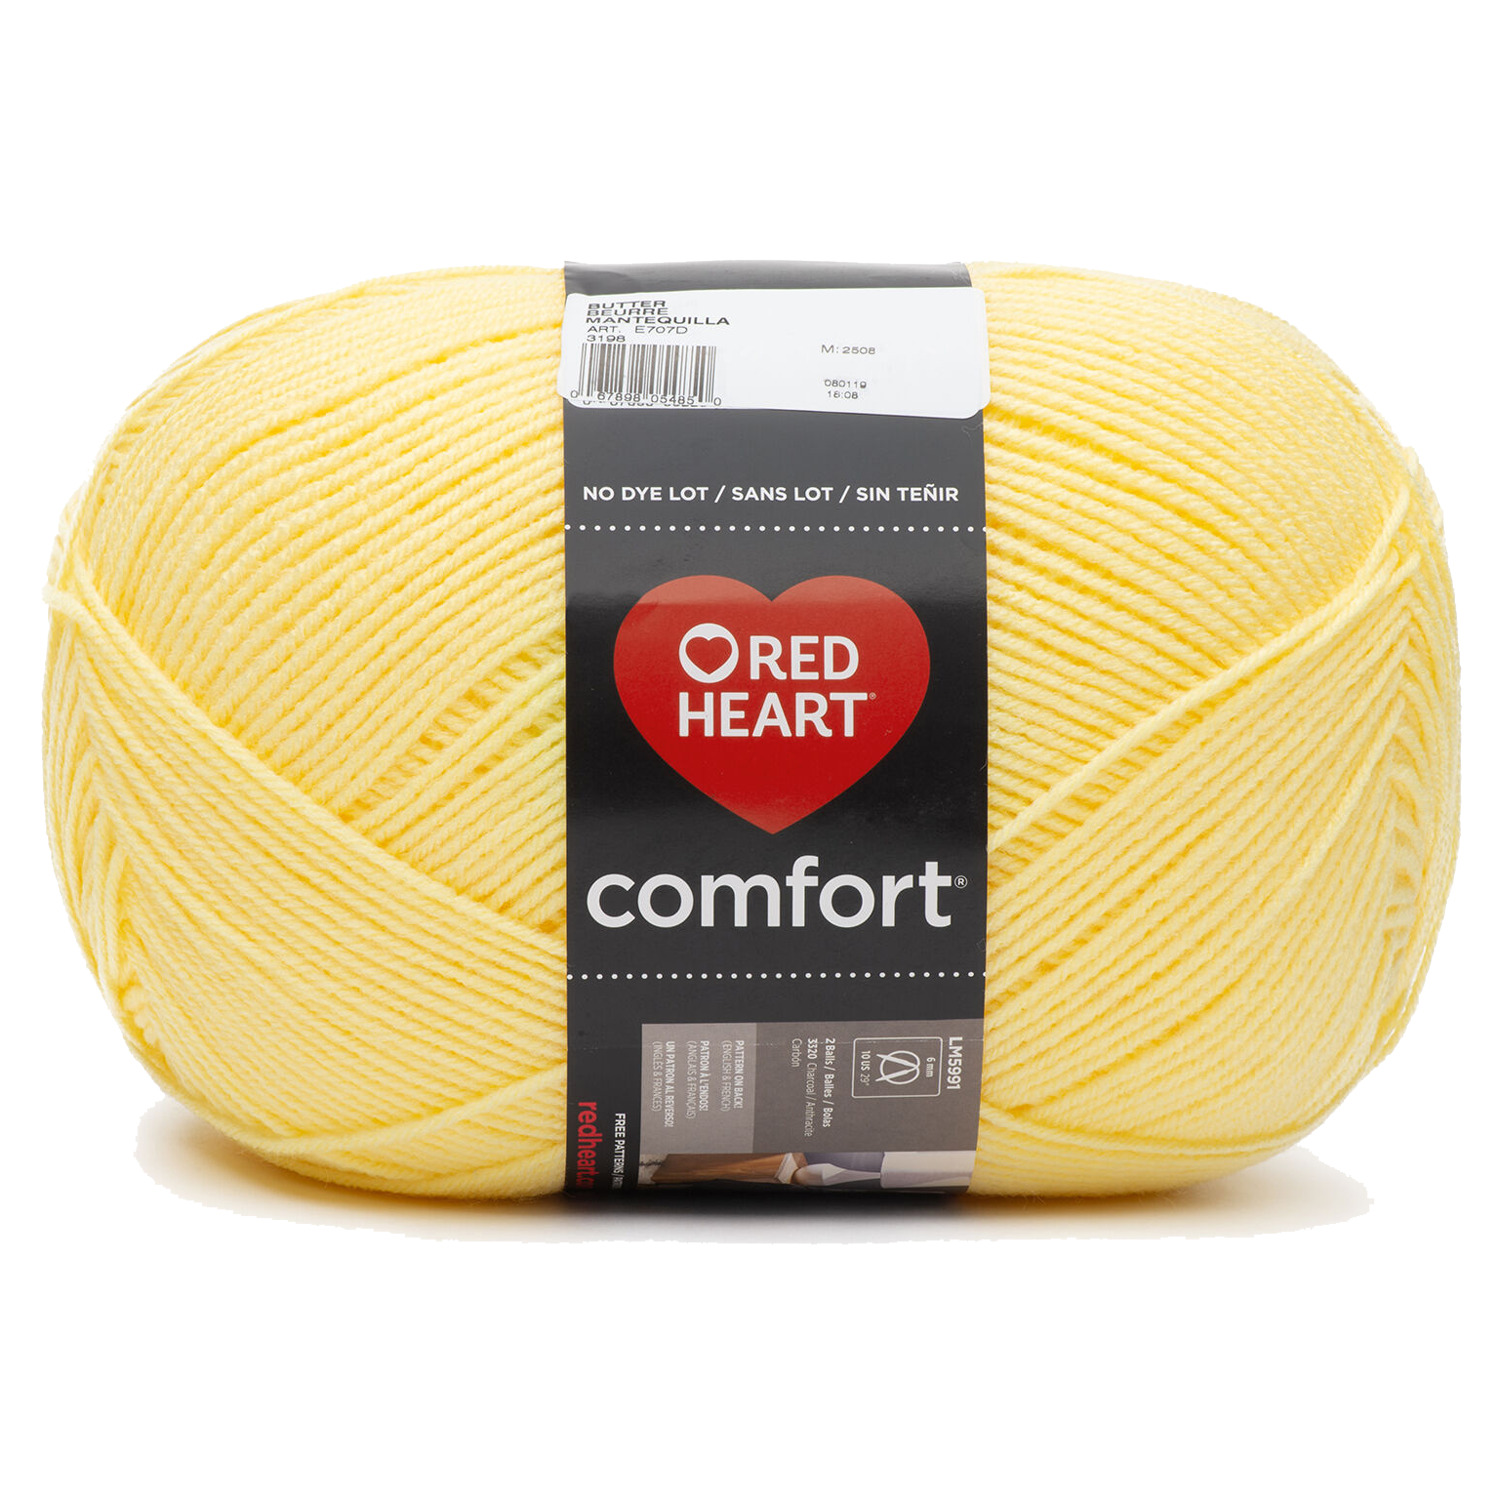 Red Heart Comfort - Yarn, butter